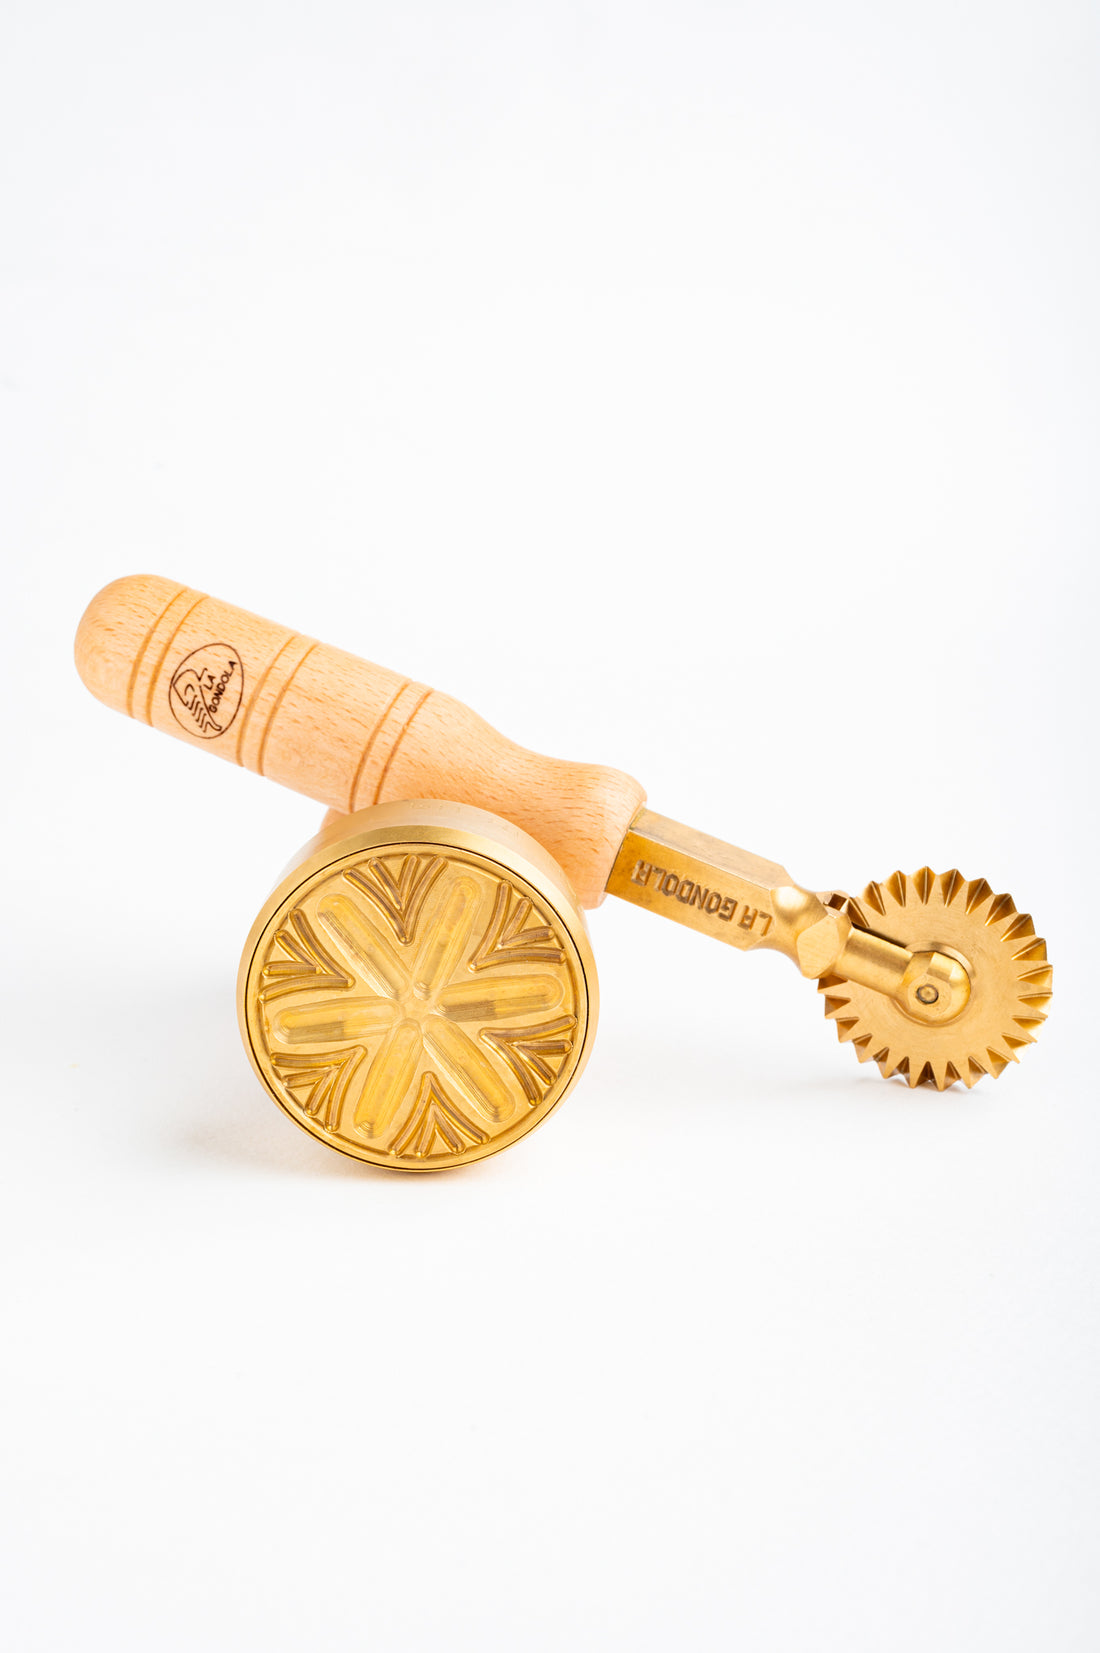 LaGondola Bundle : 1 Round Corzetti Stamp,1 Pasta Cutter Festoneed in Brass and Natural Wood - FLORA